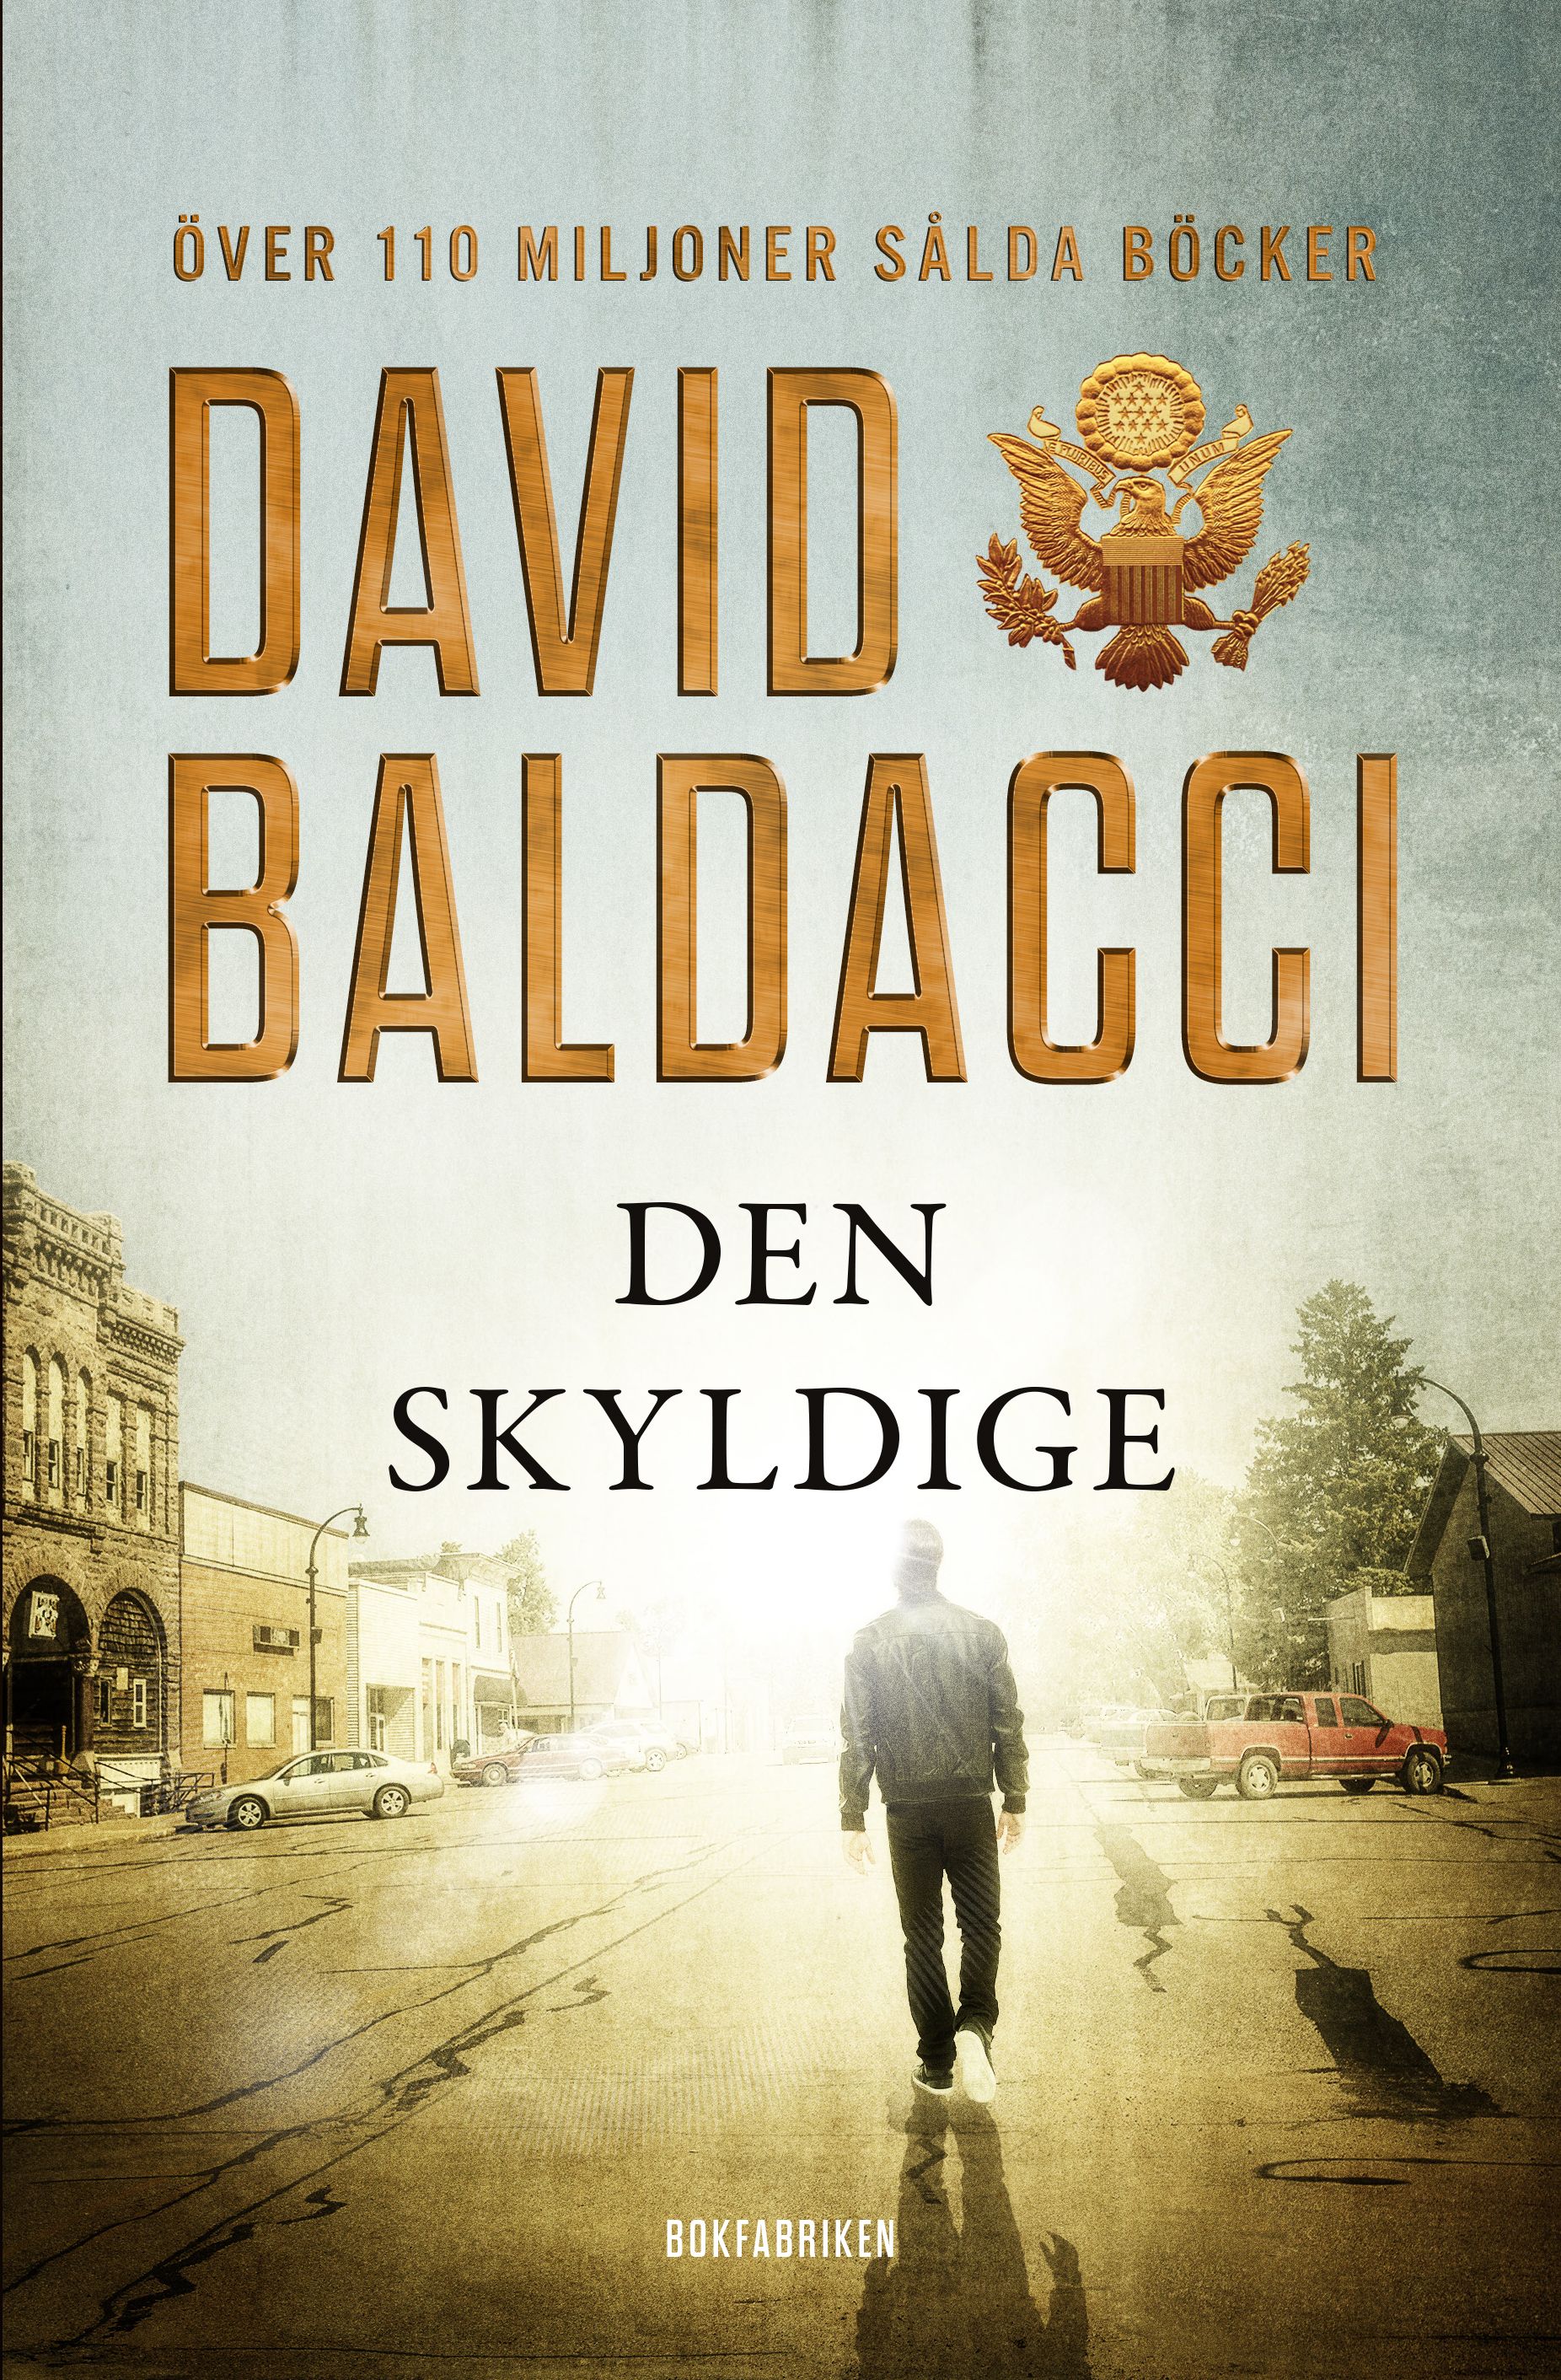 Den skyldige, eBook by David Baldacci